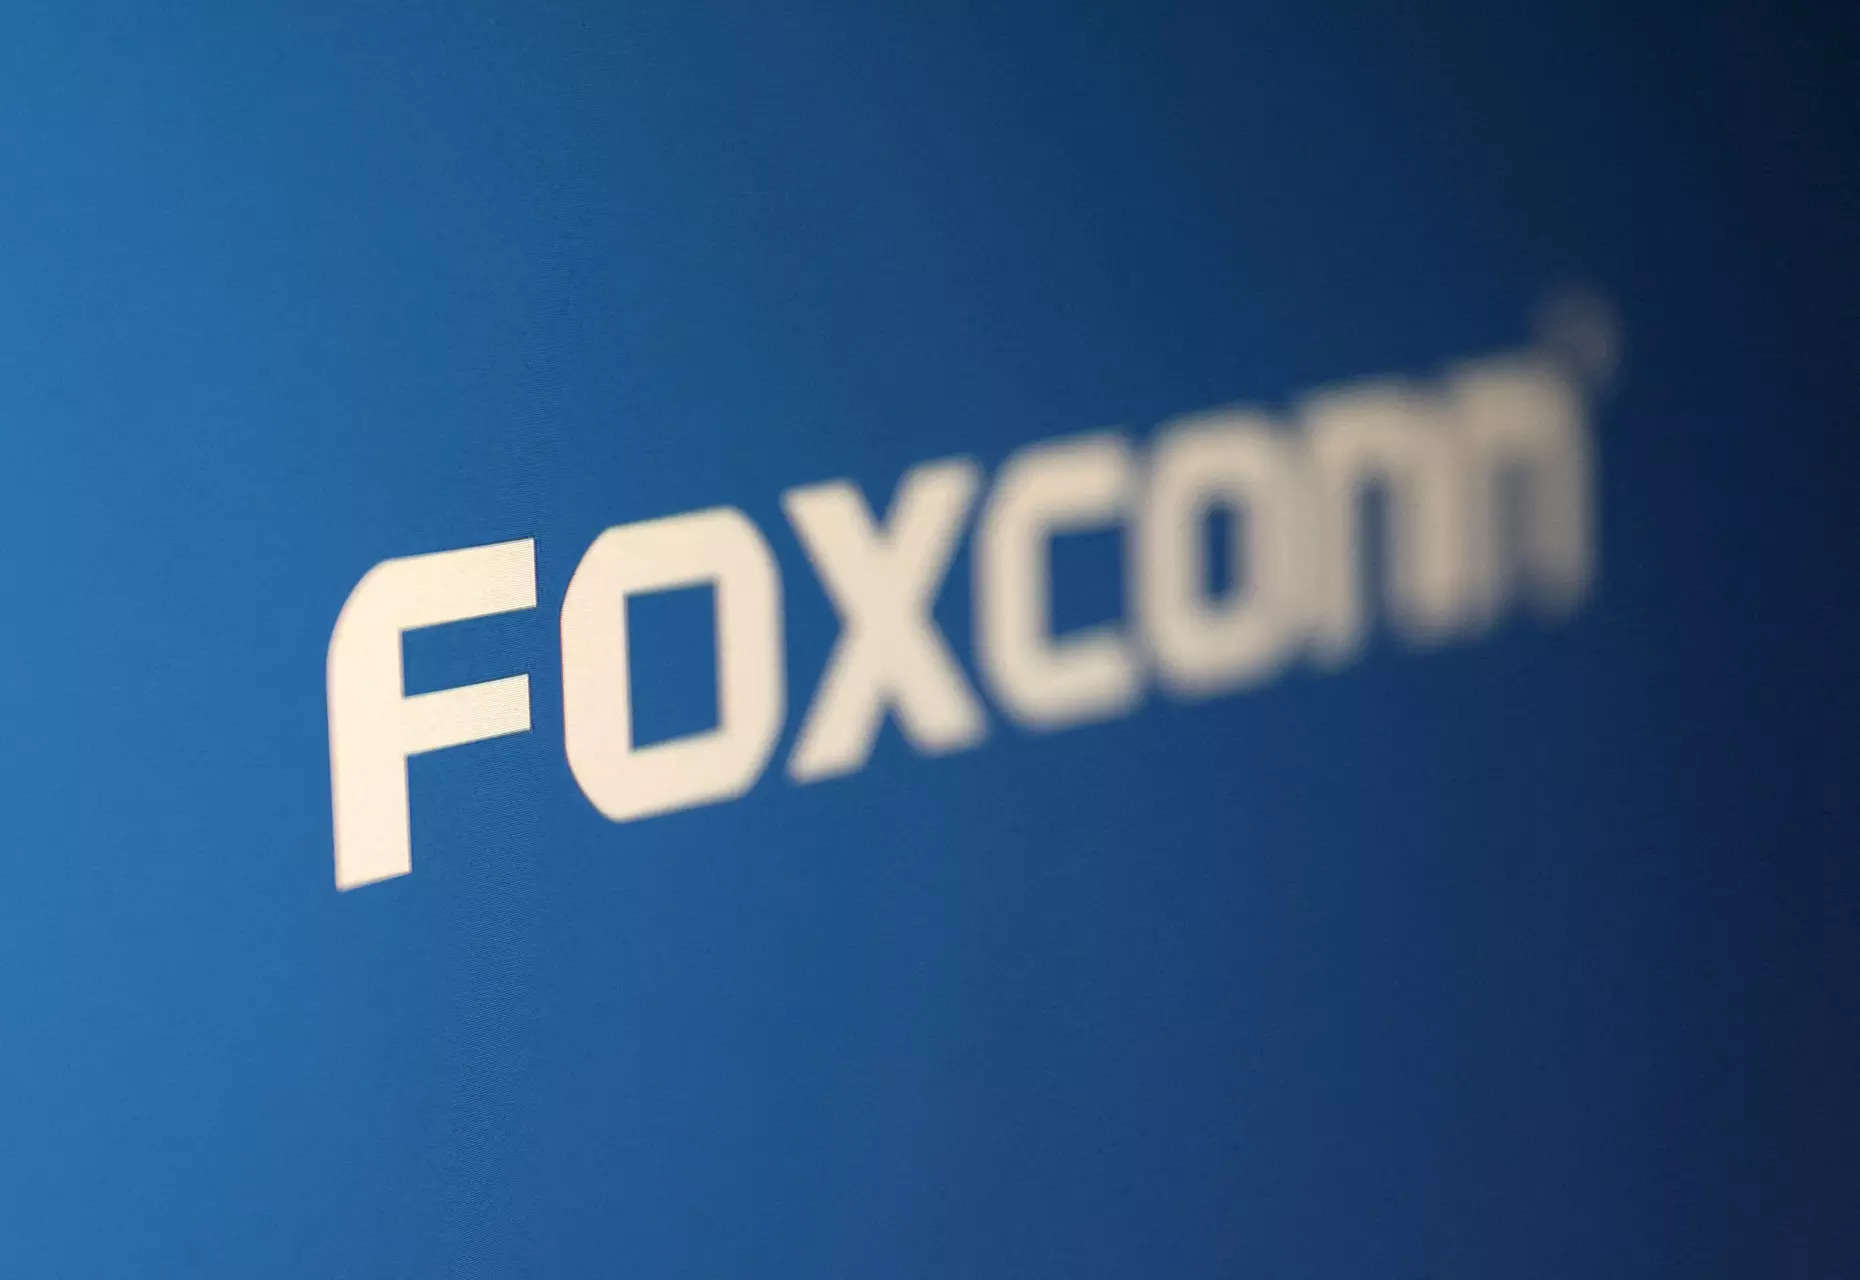 FILE PHOTO: Illustration shows Foxconn logo